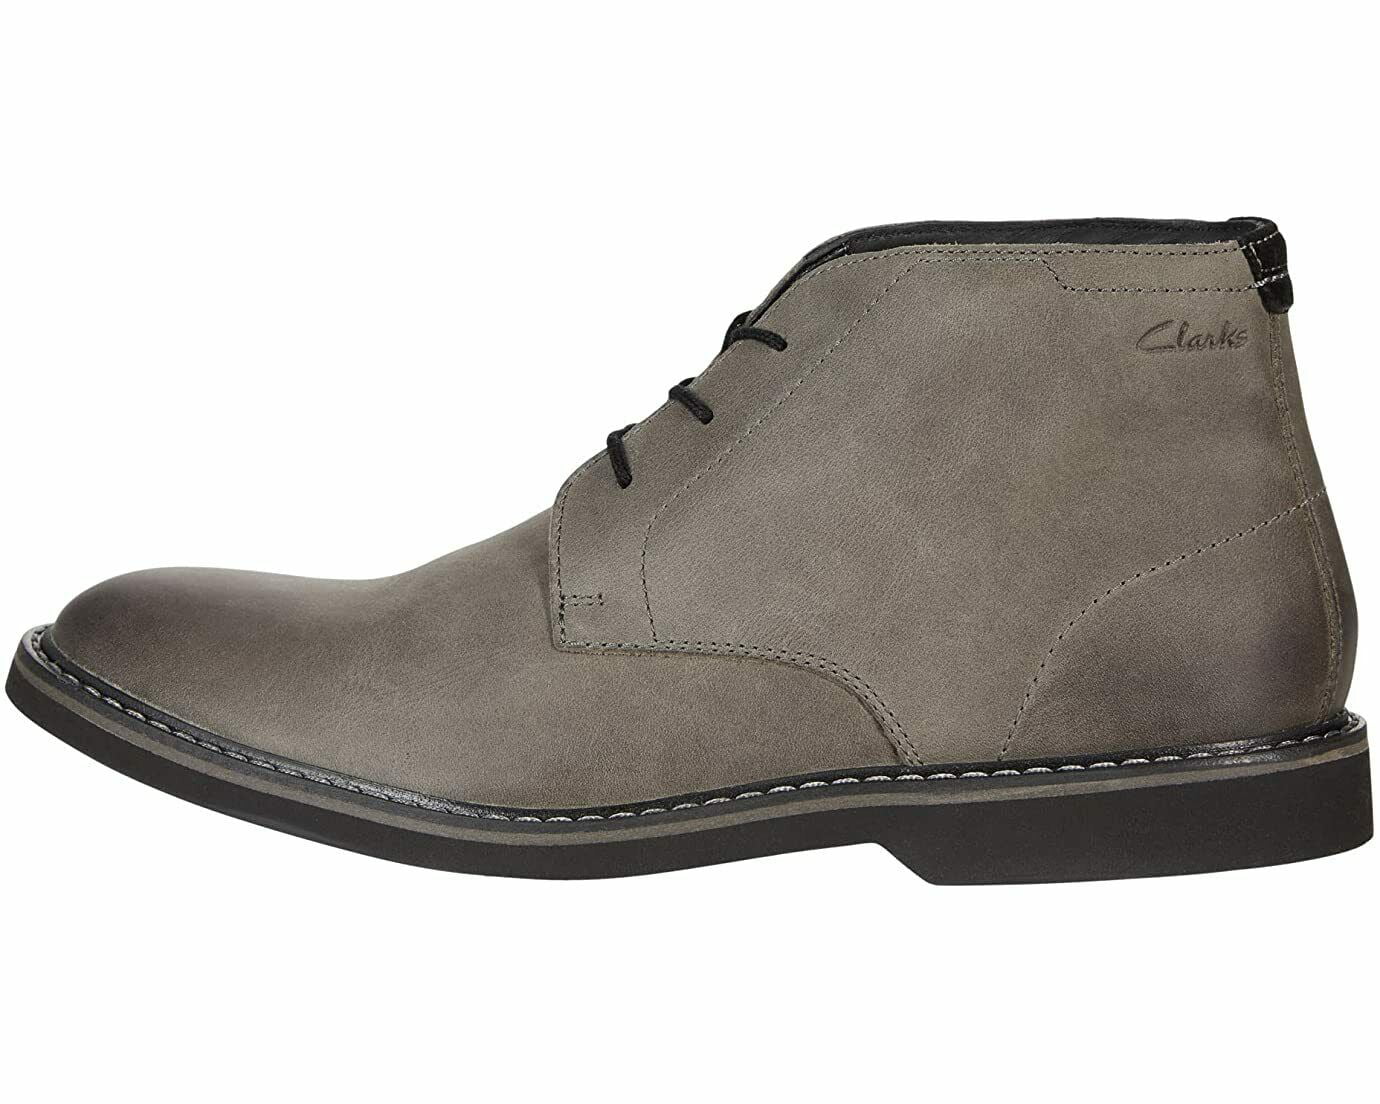 Men's Shoes Clarks ATTICUS LT MID Chukka Boots 61364 DARK GREY LEATHER